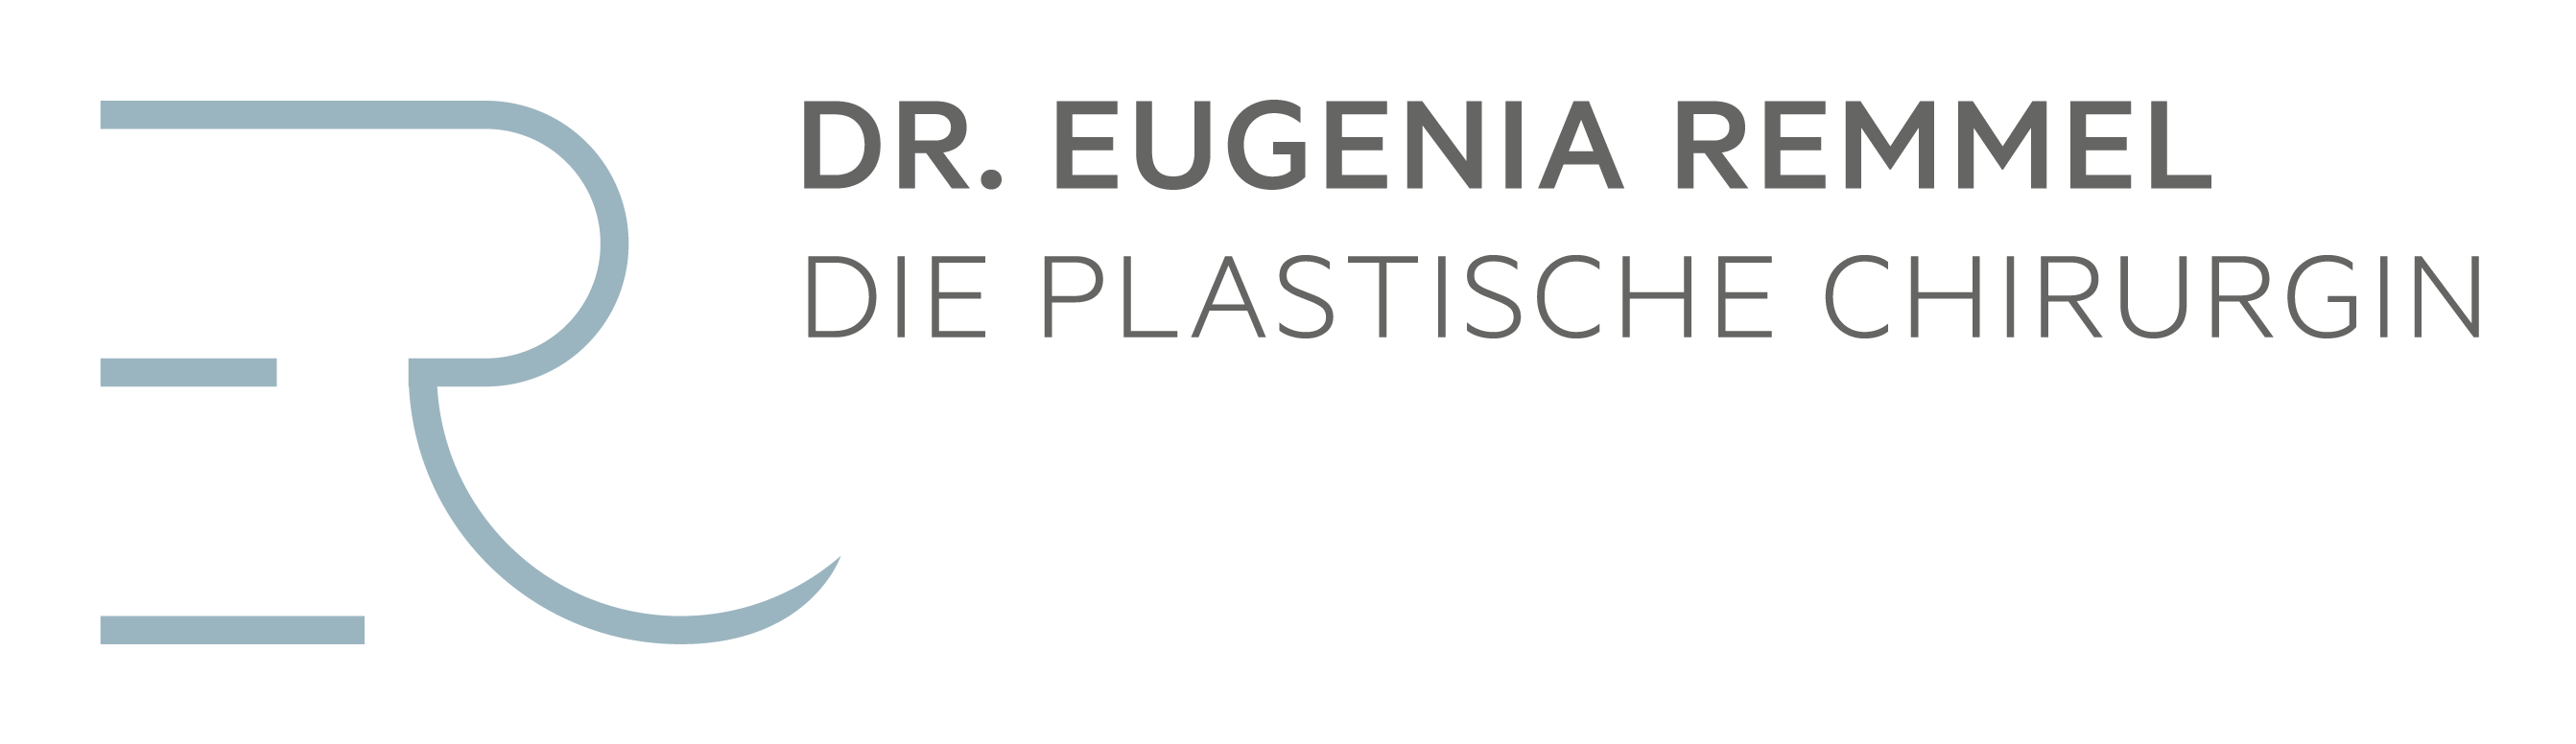 Plastische Chirurgie Bonn, Dr. Eugenia Remmel